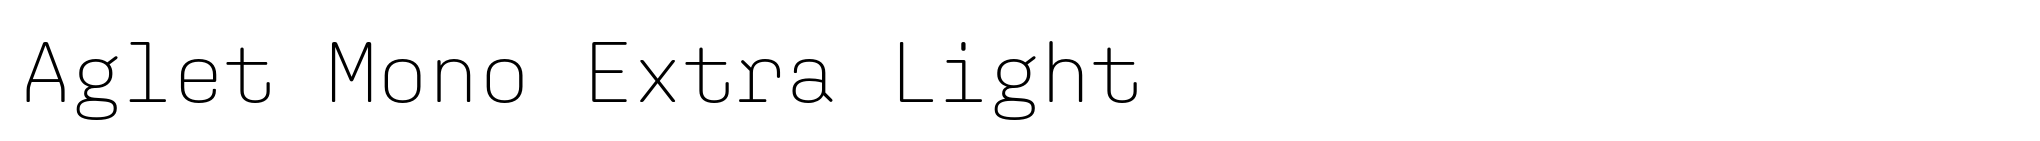 Aglet Mono Extra Light image